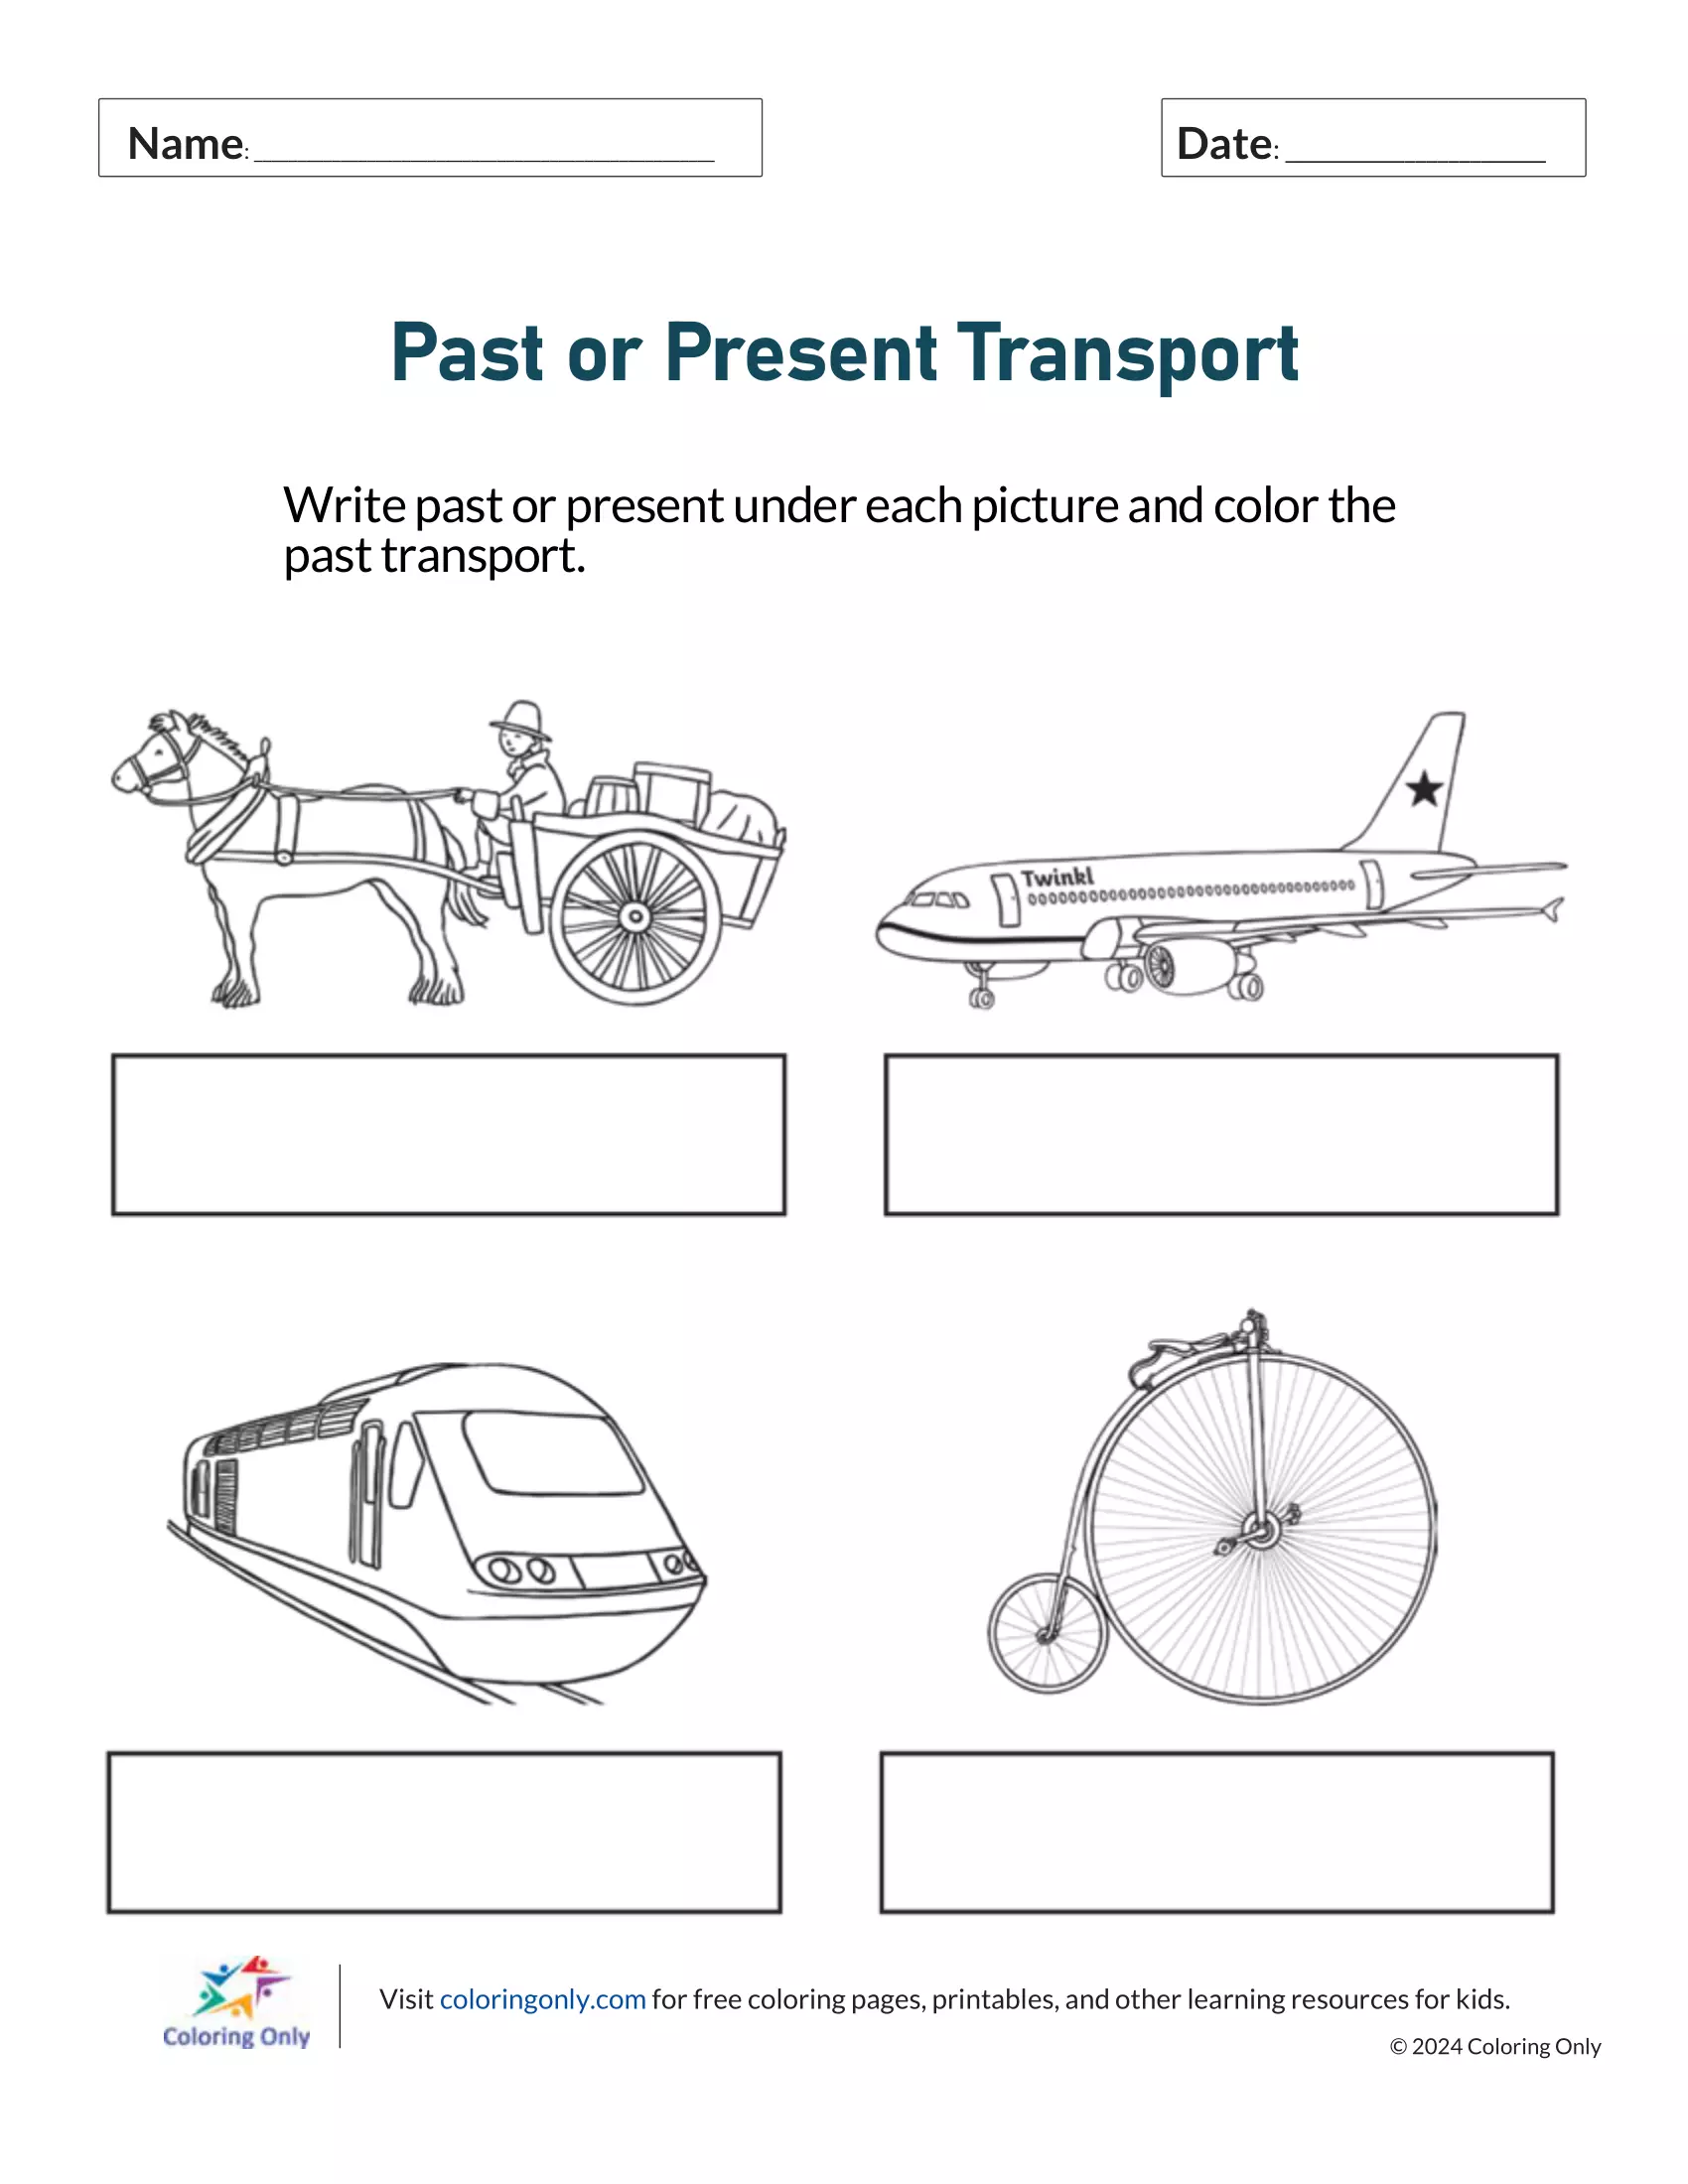 Past or Present Transport Free Printable Worksheet